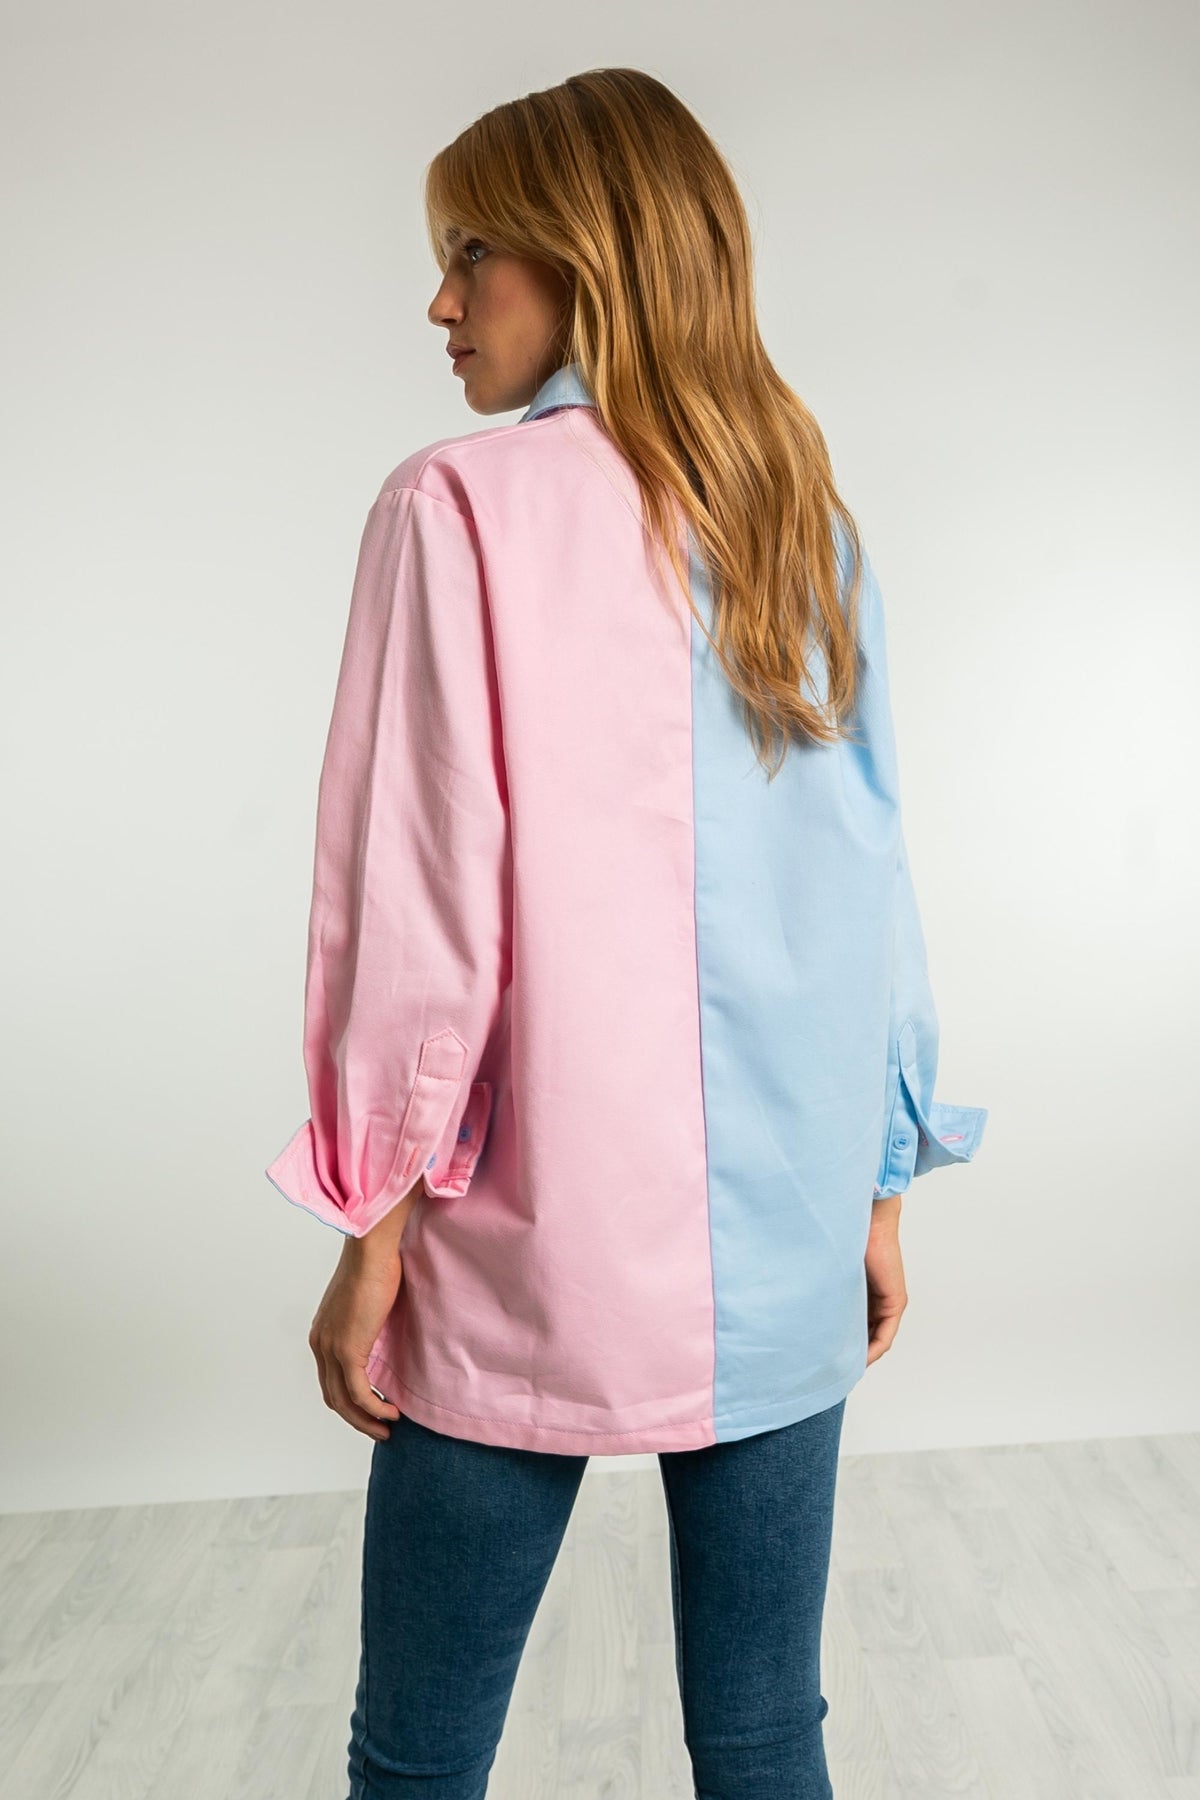 Falmouth Organic Cotton Drill Deck Shirt Blue/Pink